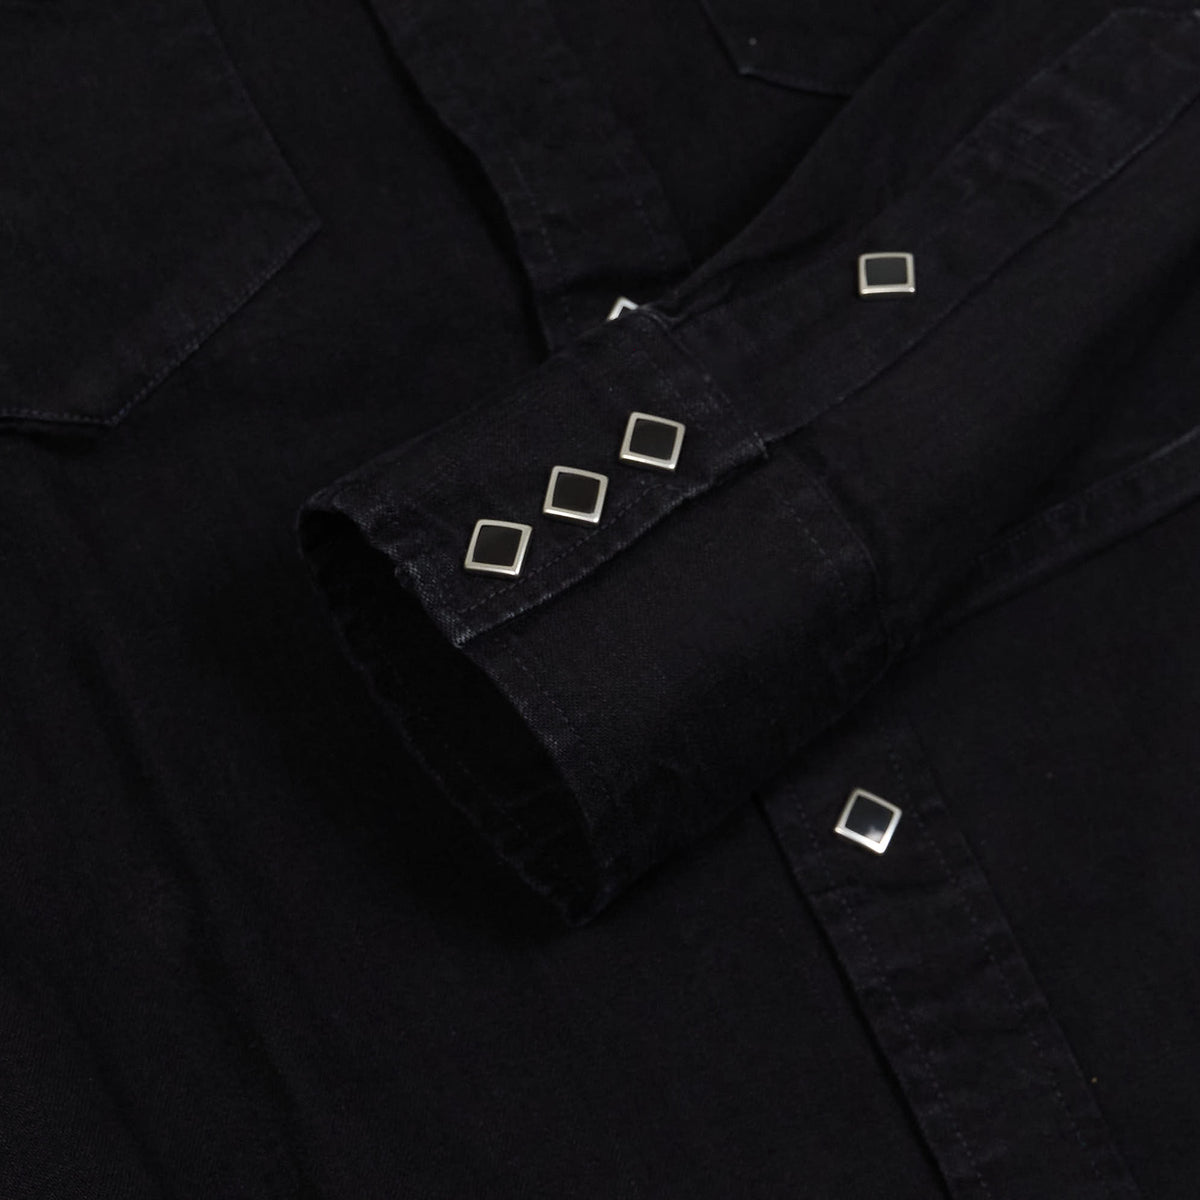 Double RL Long Sleeve Sawtooth Black Denim Western Shirt